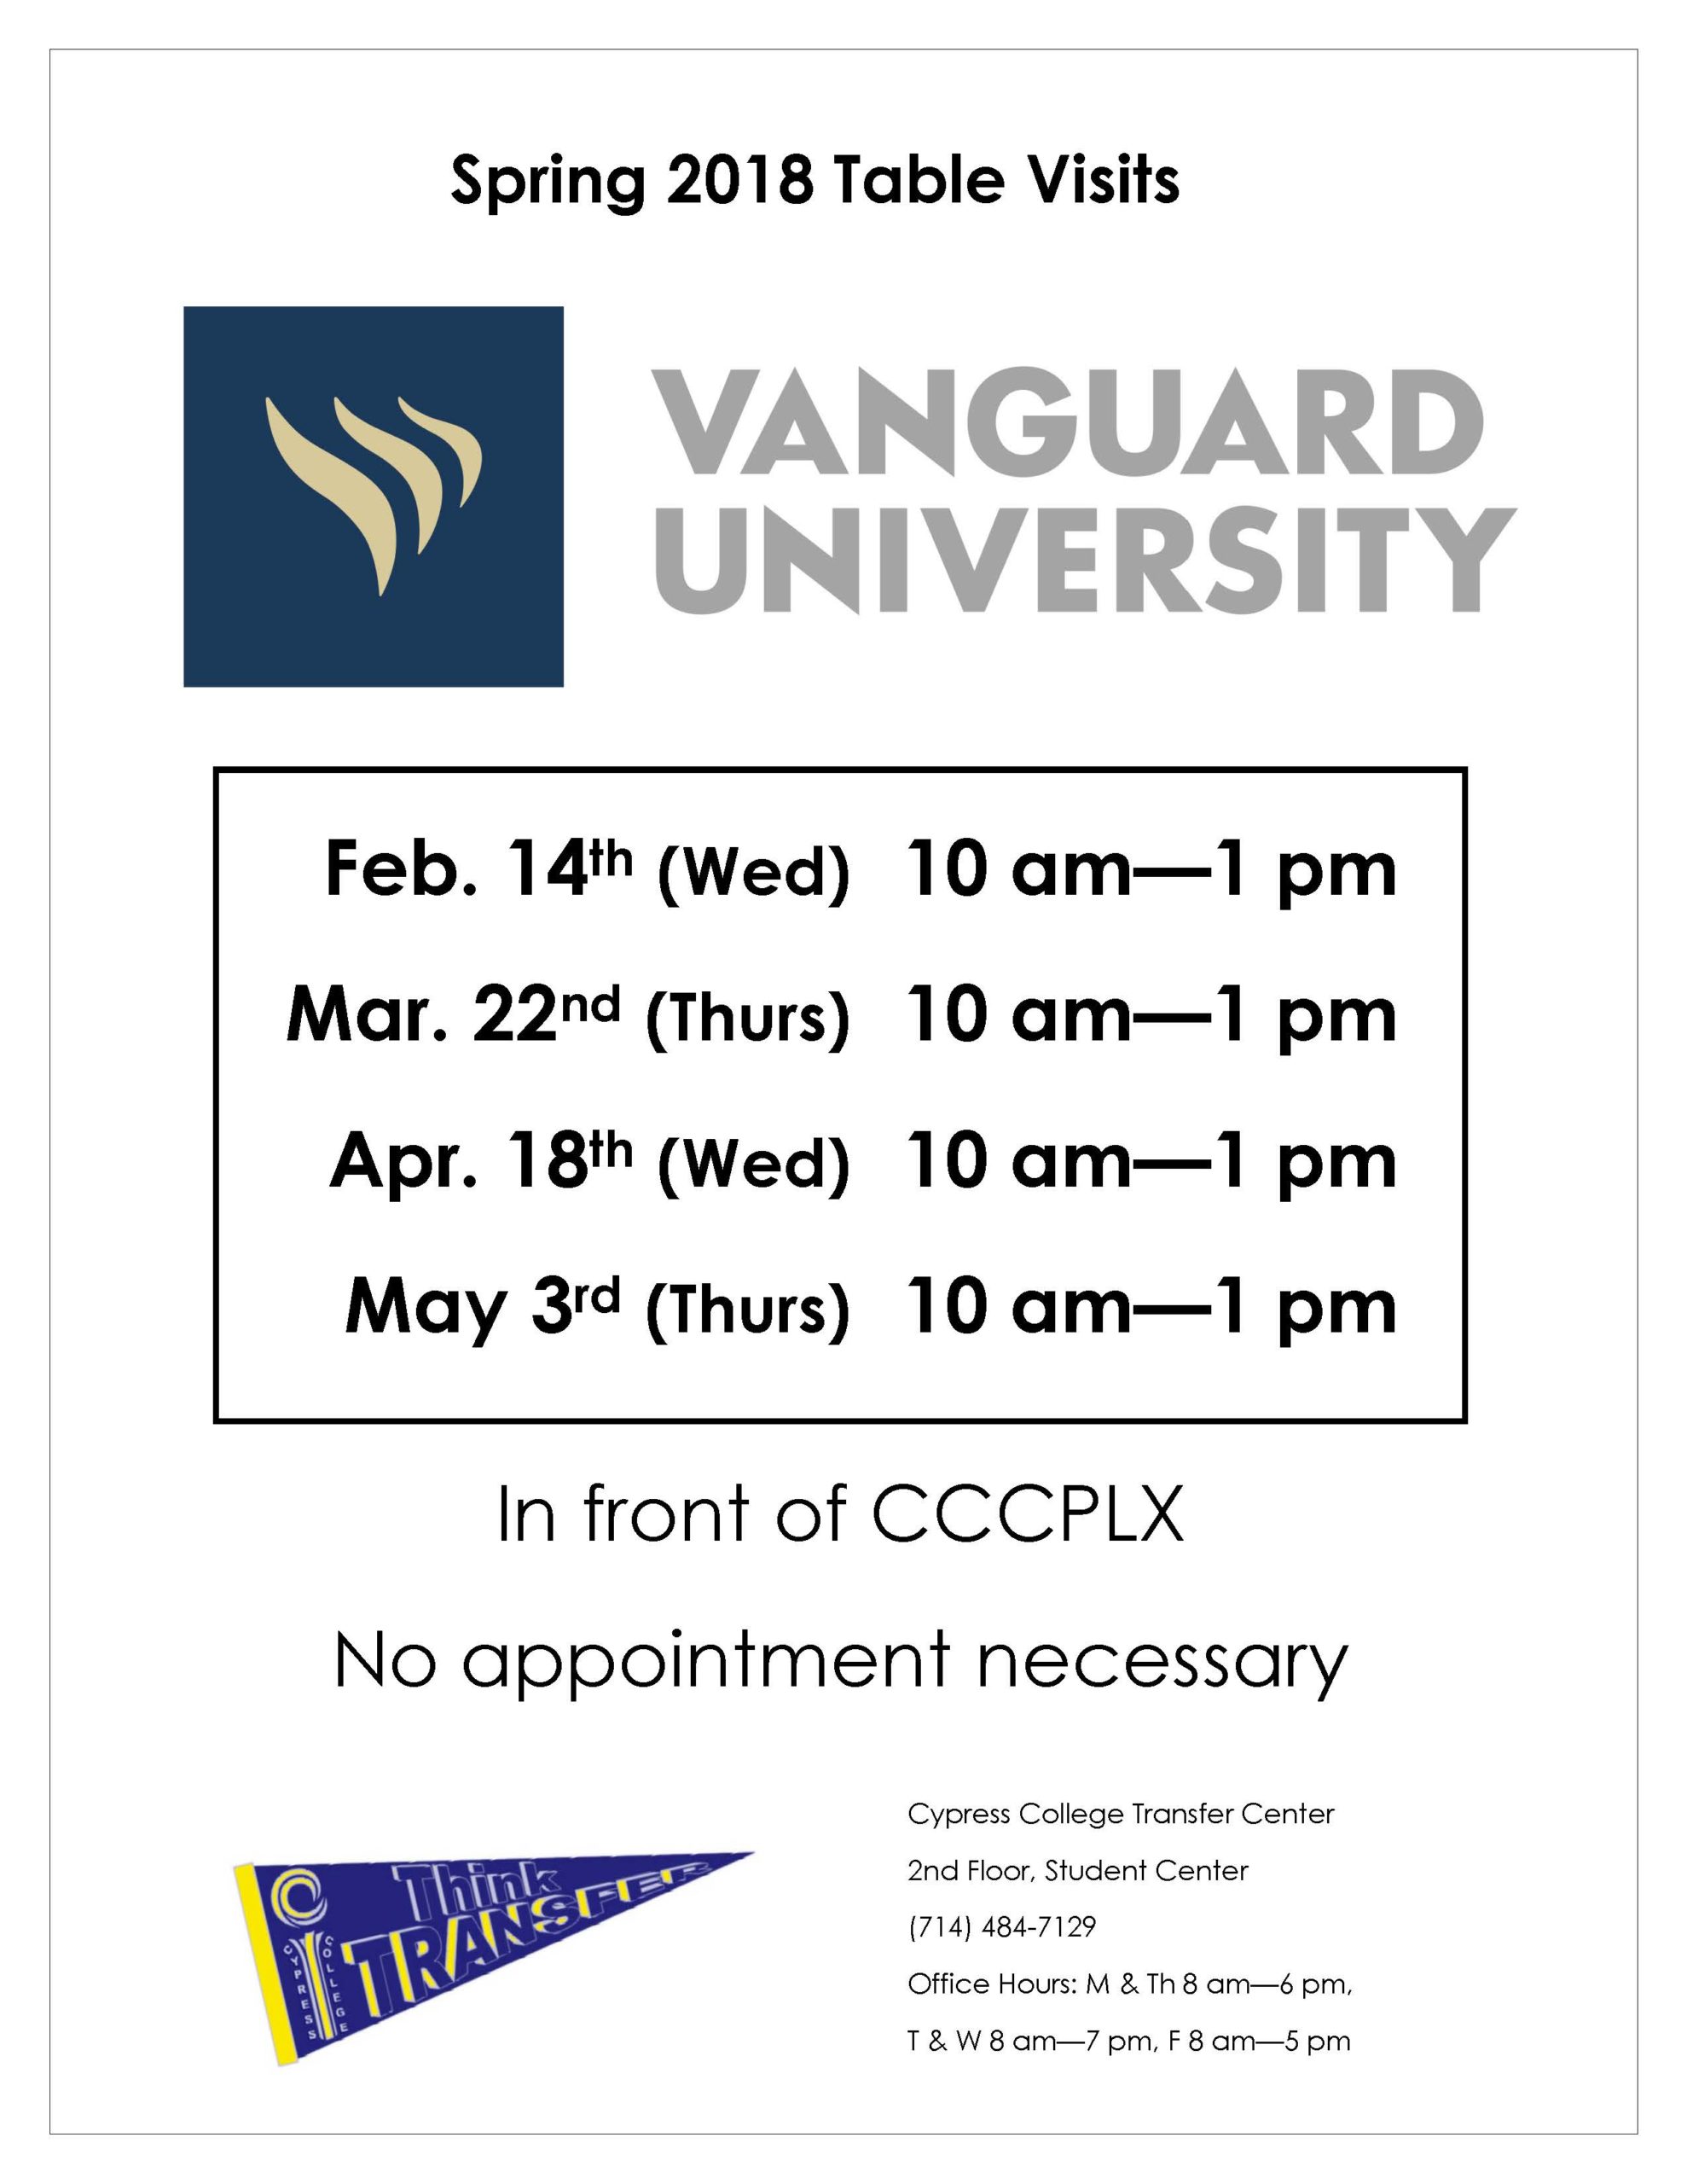 Vanguard University table visit flyer.